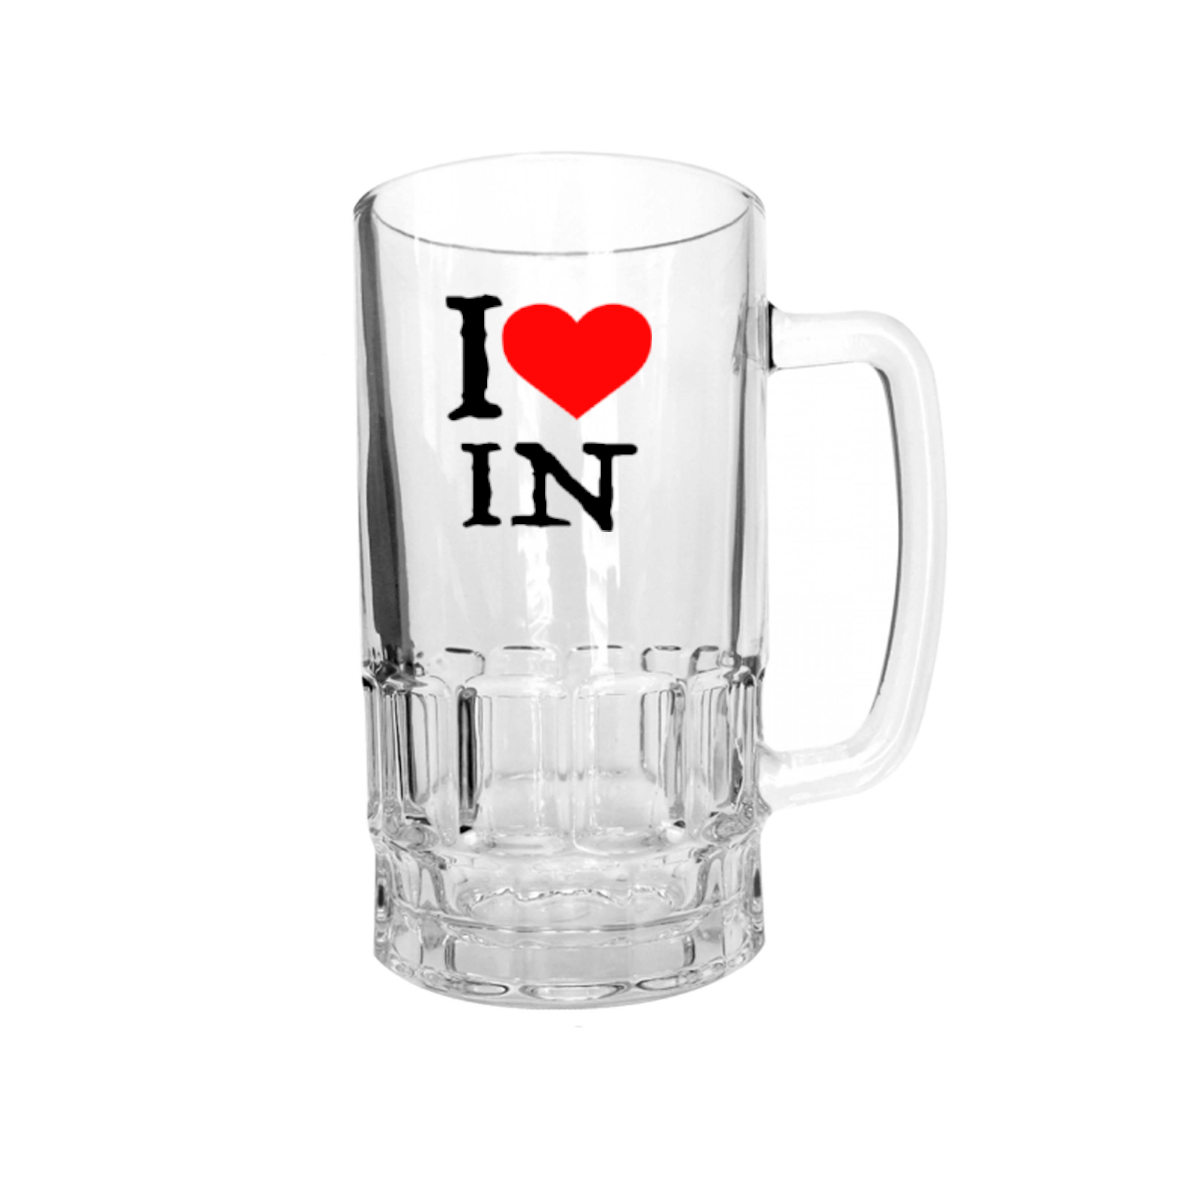 AGAD Turista (I Love India Glass Beer Stein)